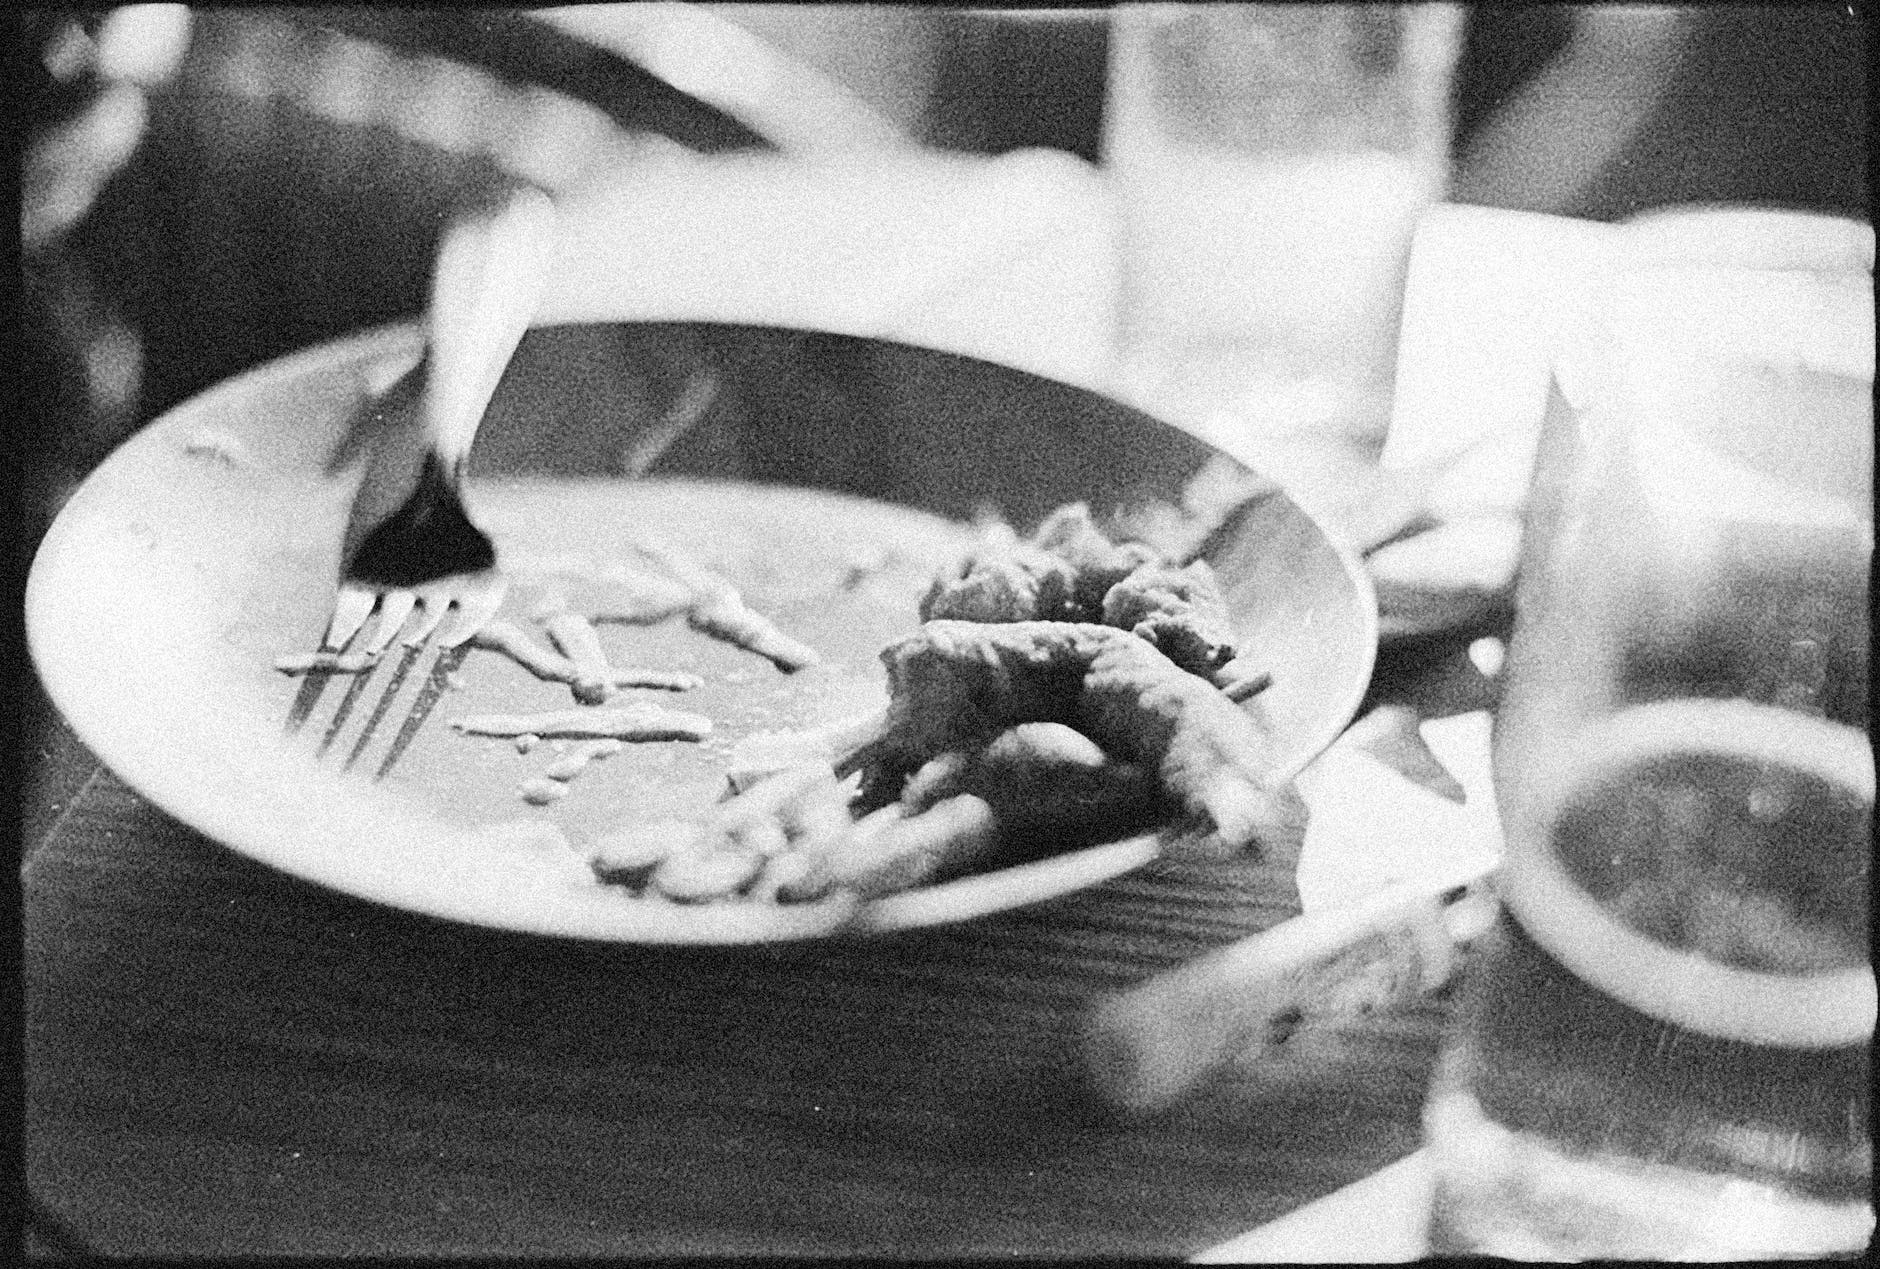 Советская диета. Лечебное питание СССР. 1940s meal. It wants to eat me